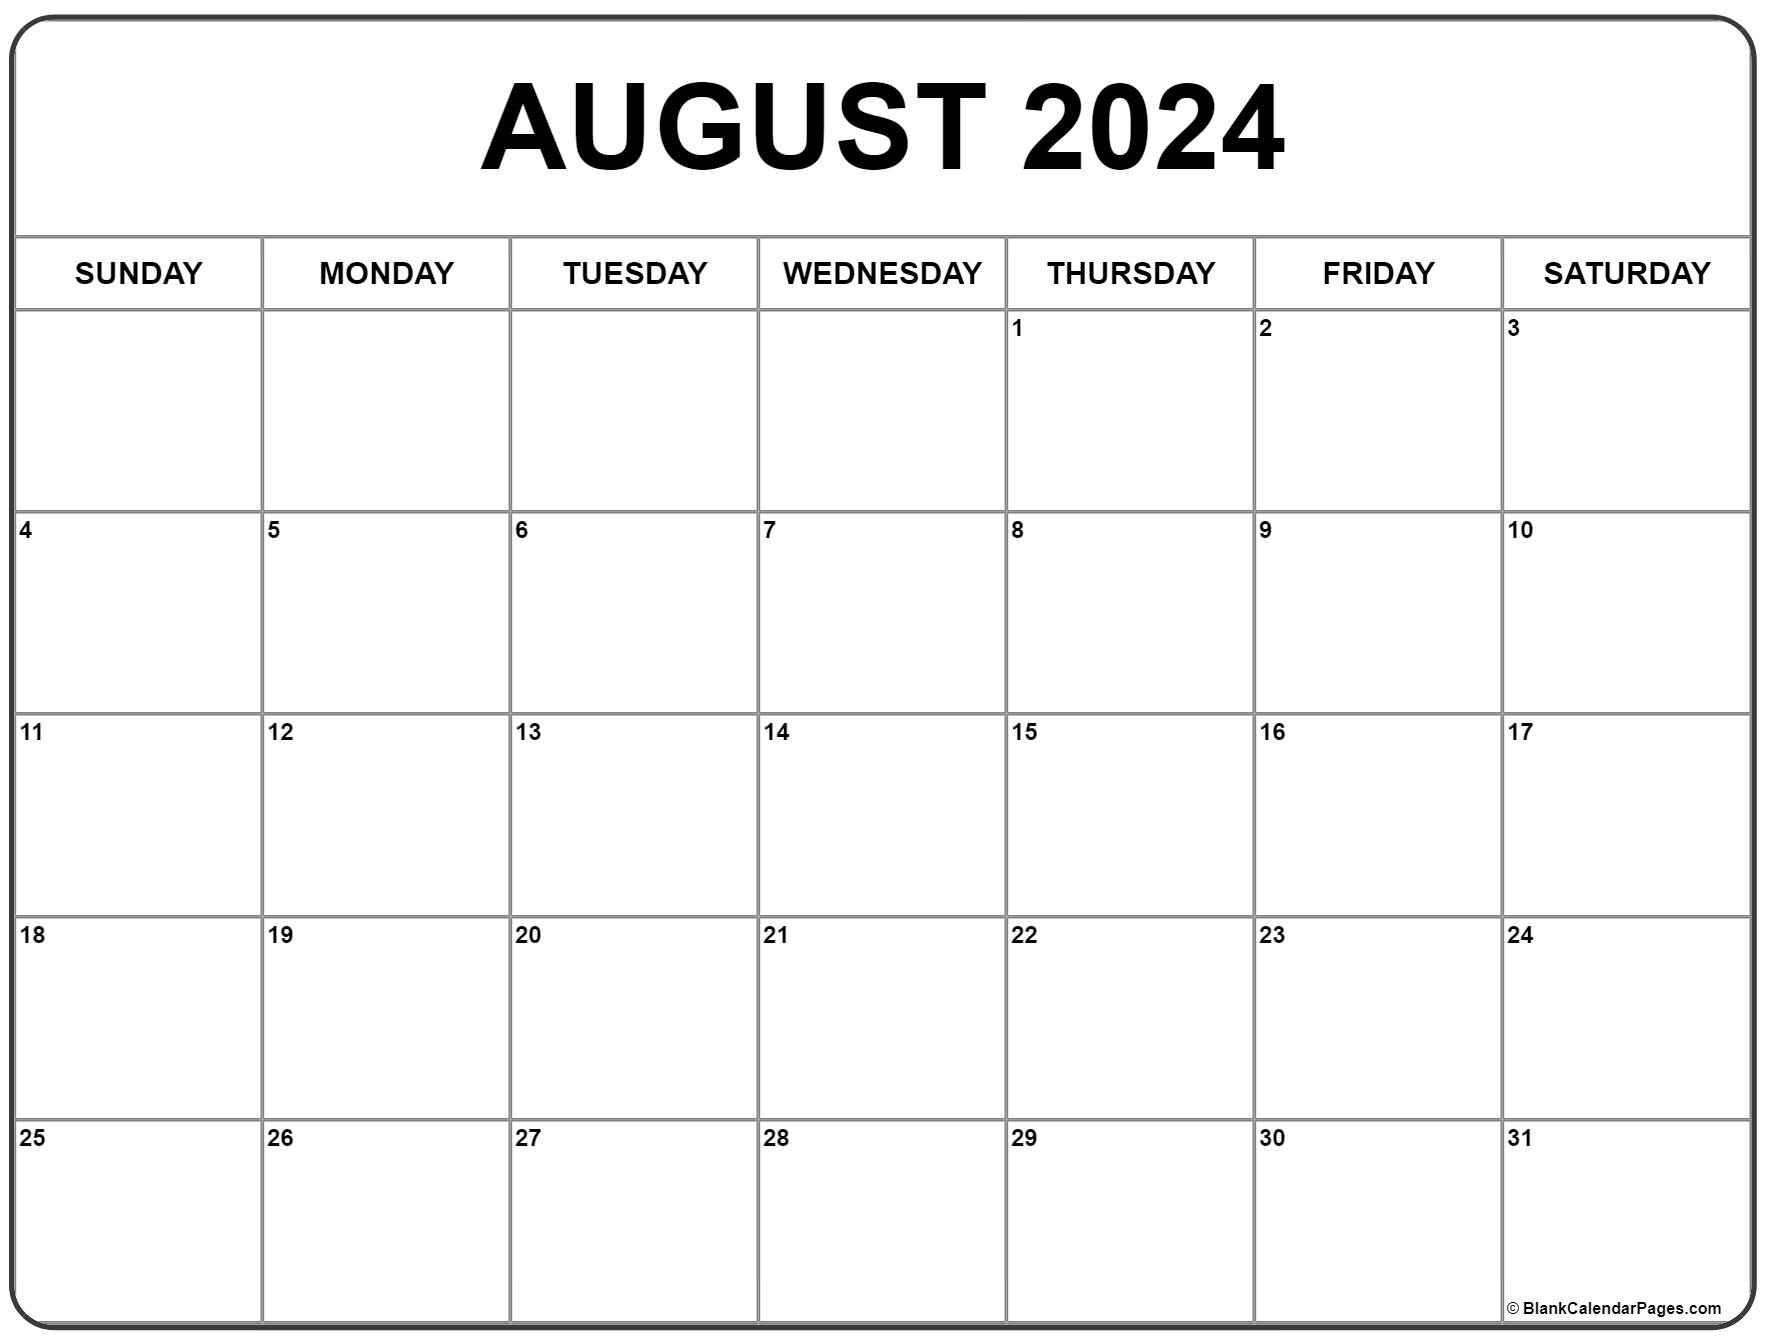 August 2024 Calendar | Free Printable Calendar for Printable Monthly Calendar August 2024